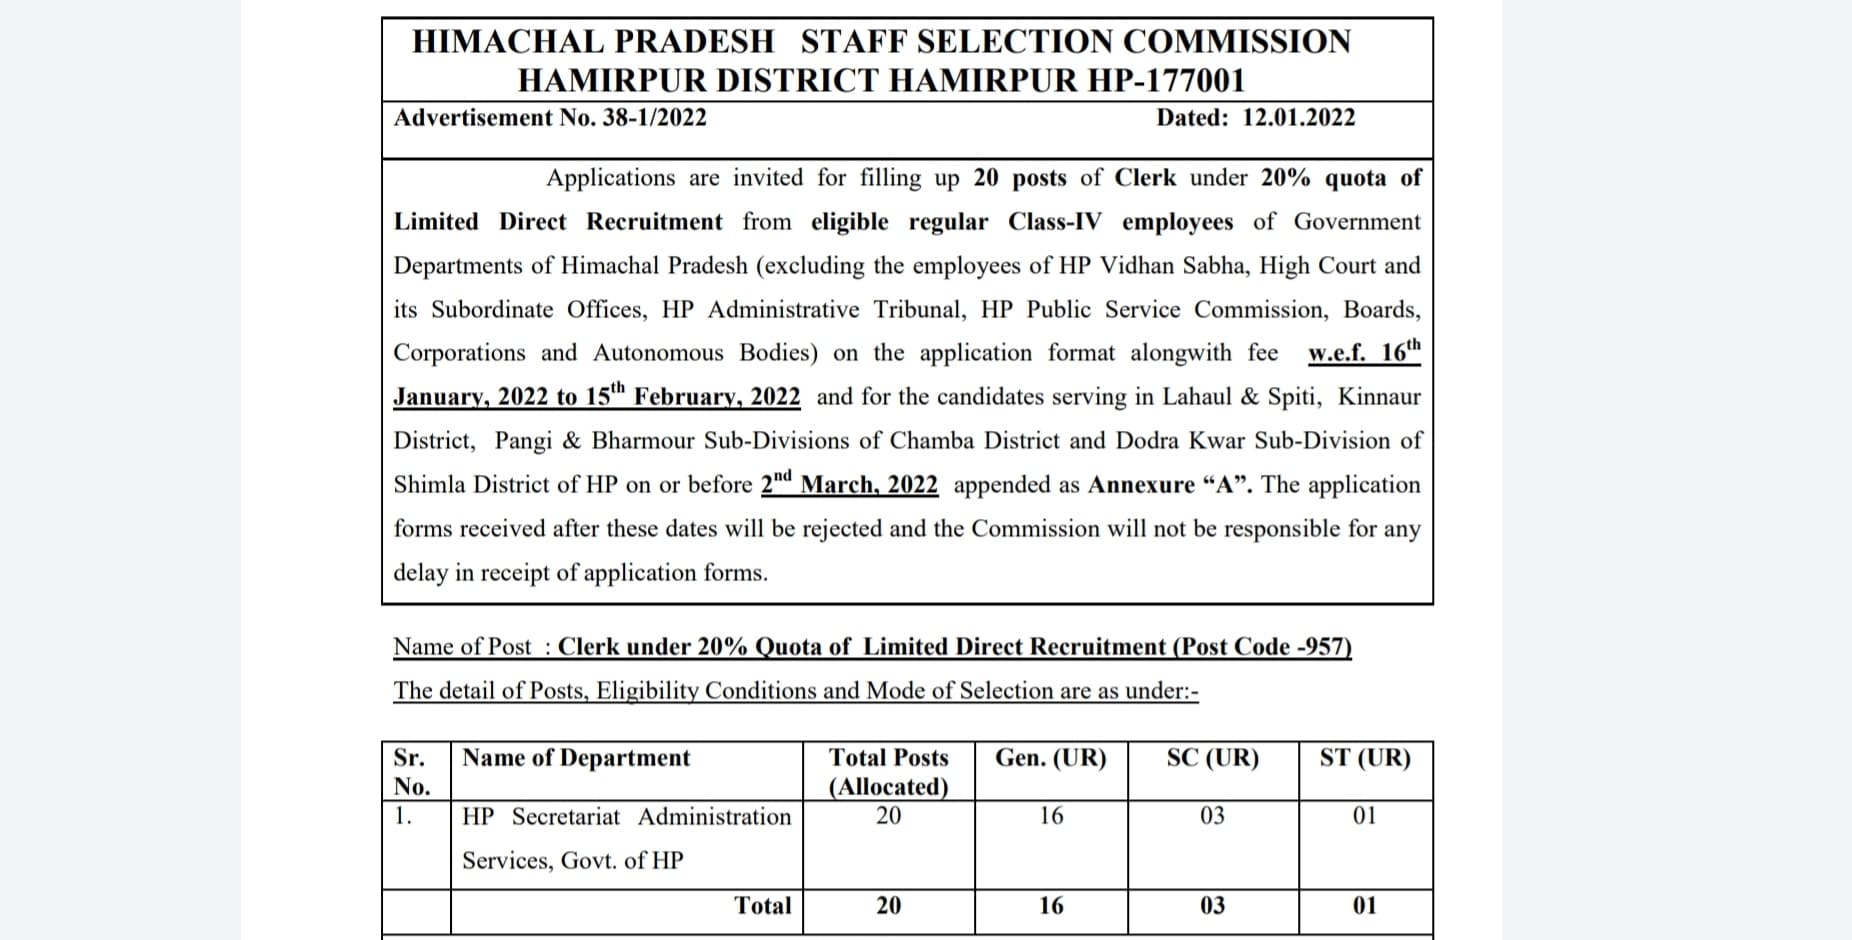 HPSSC Hamirpur LDR Clerk 20 Vacancies Recruitment 2022 HP Secretariat Administration Services, Govt. of HP